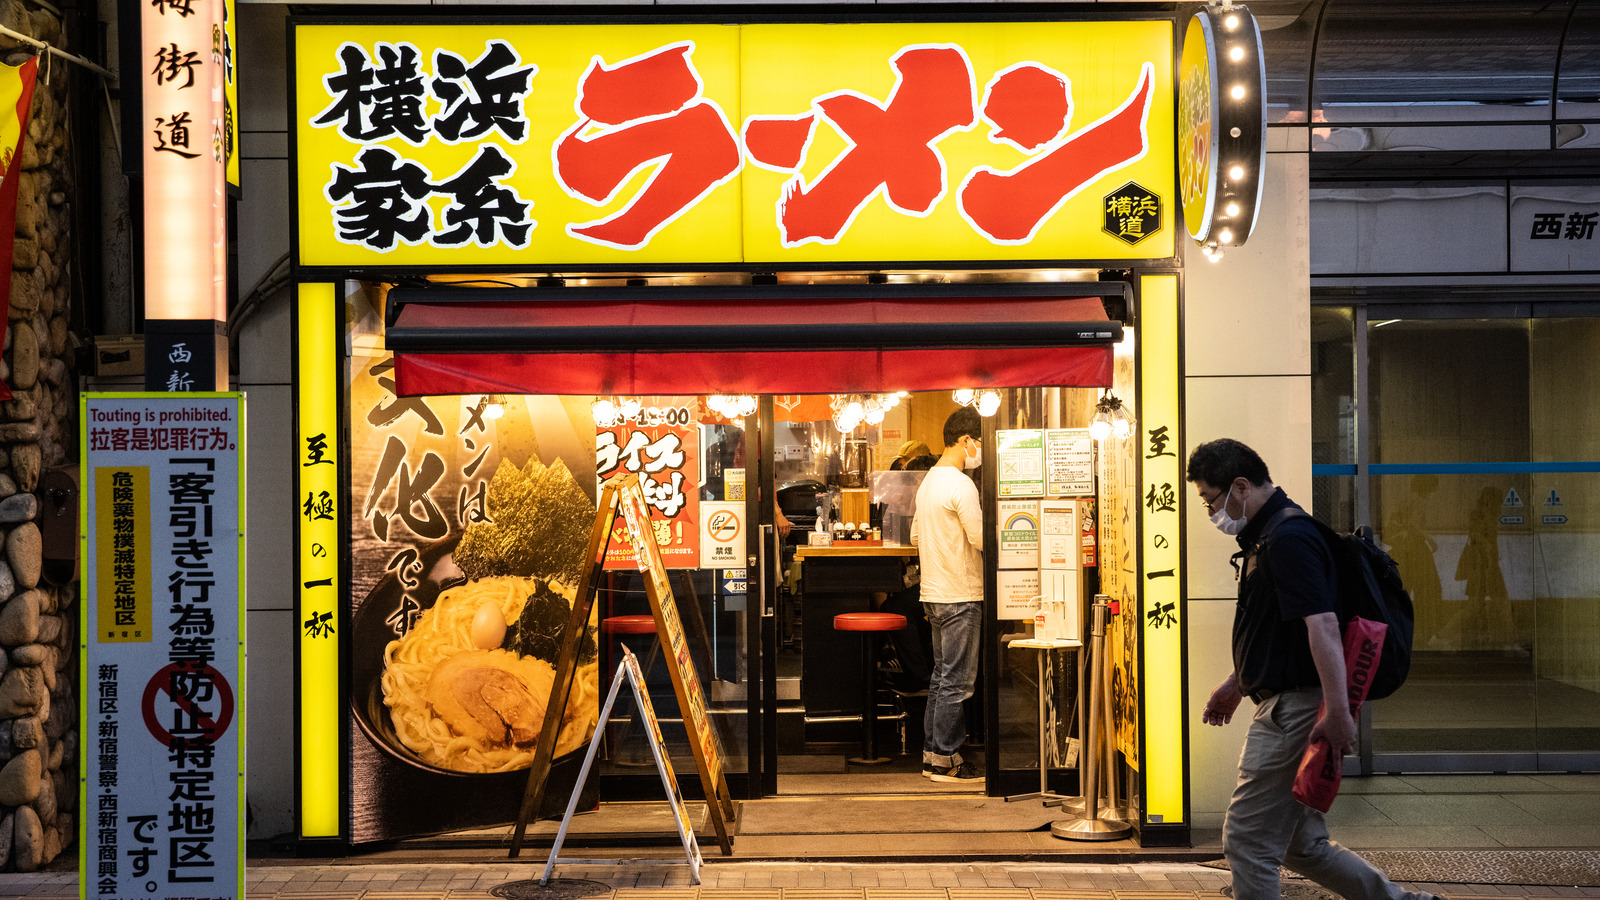 Den Restaurant Tokyo - Creative Kaiseki • Just One Cookbook